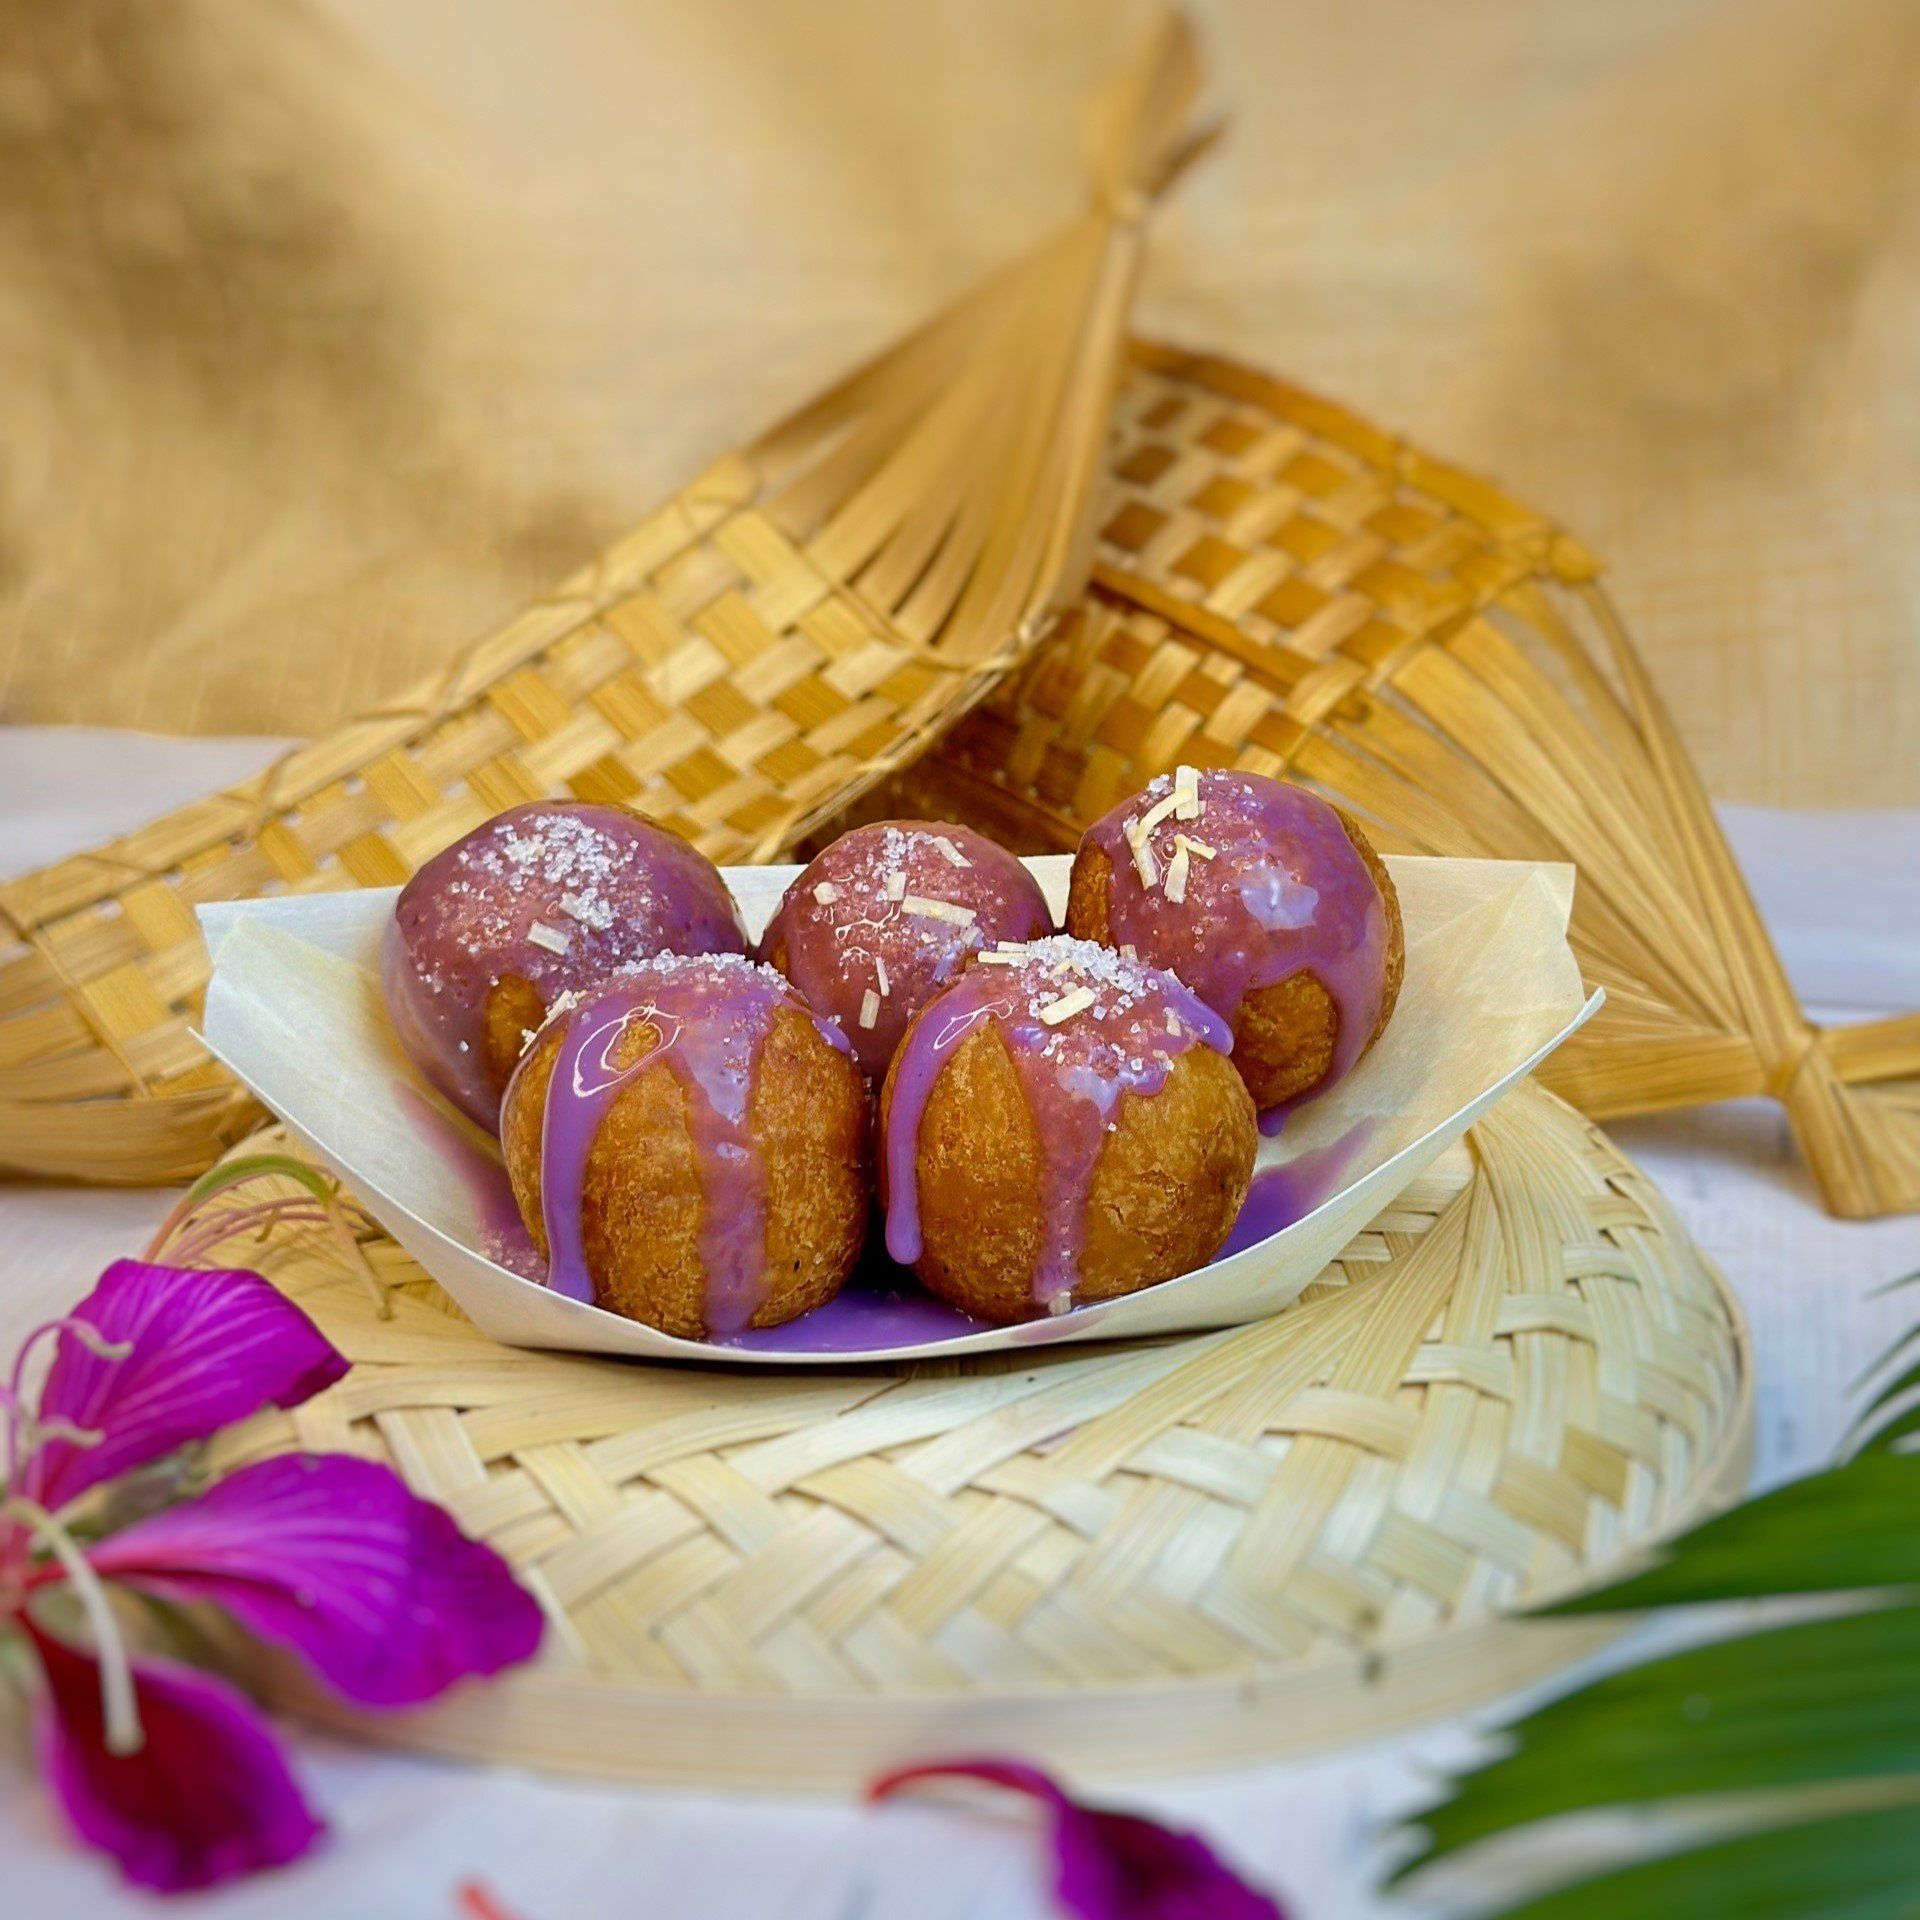 Greek Shaker rice ball with purple potato sauce